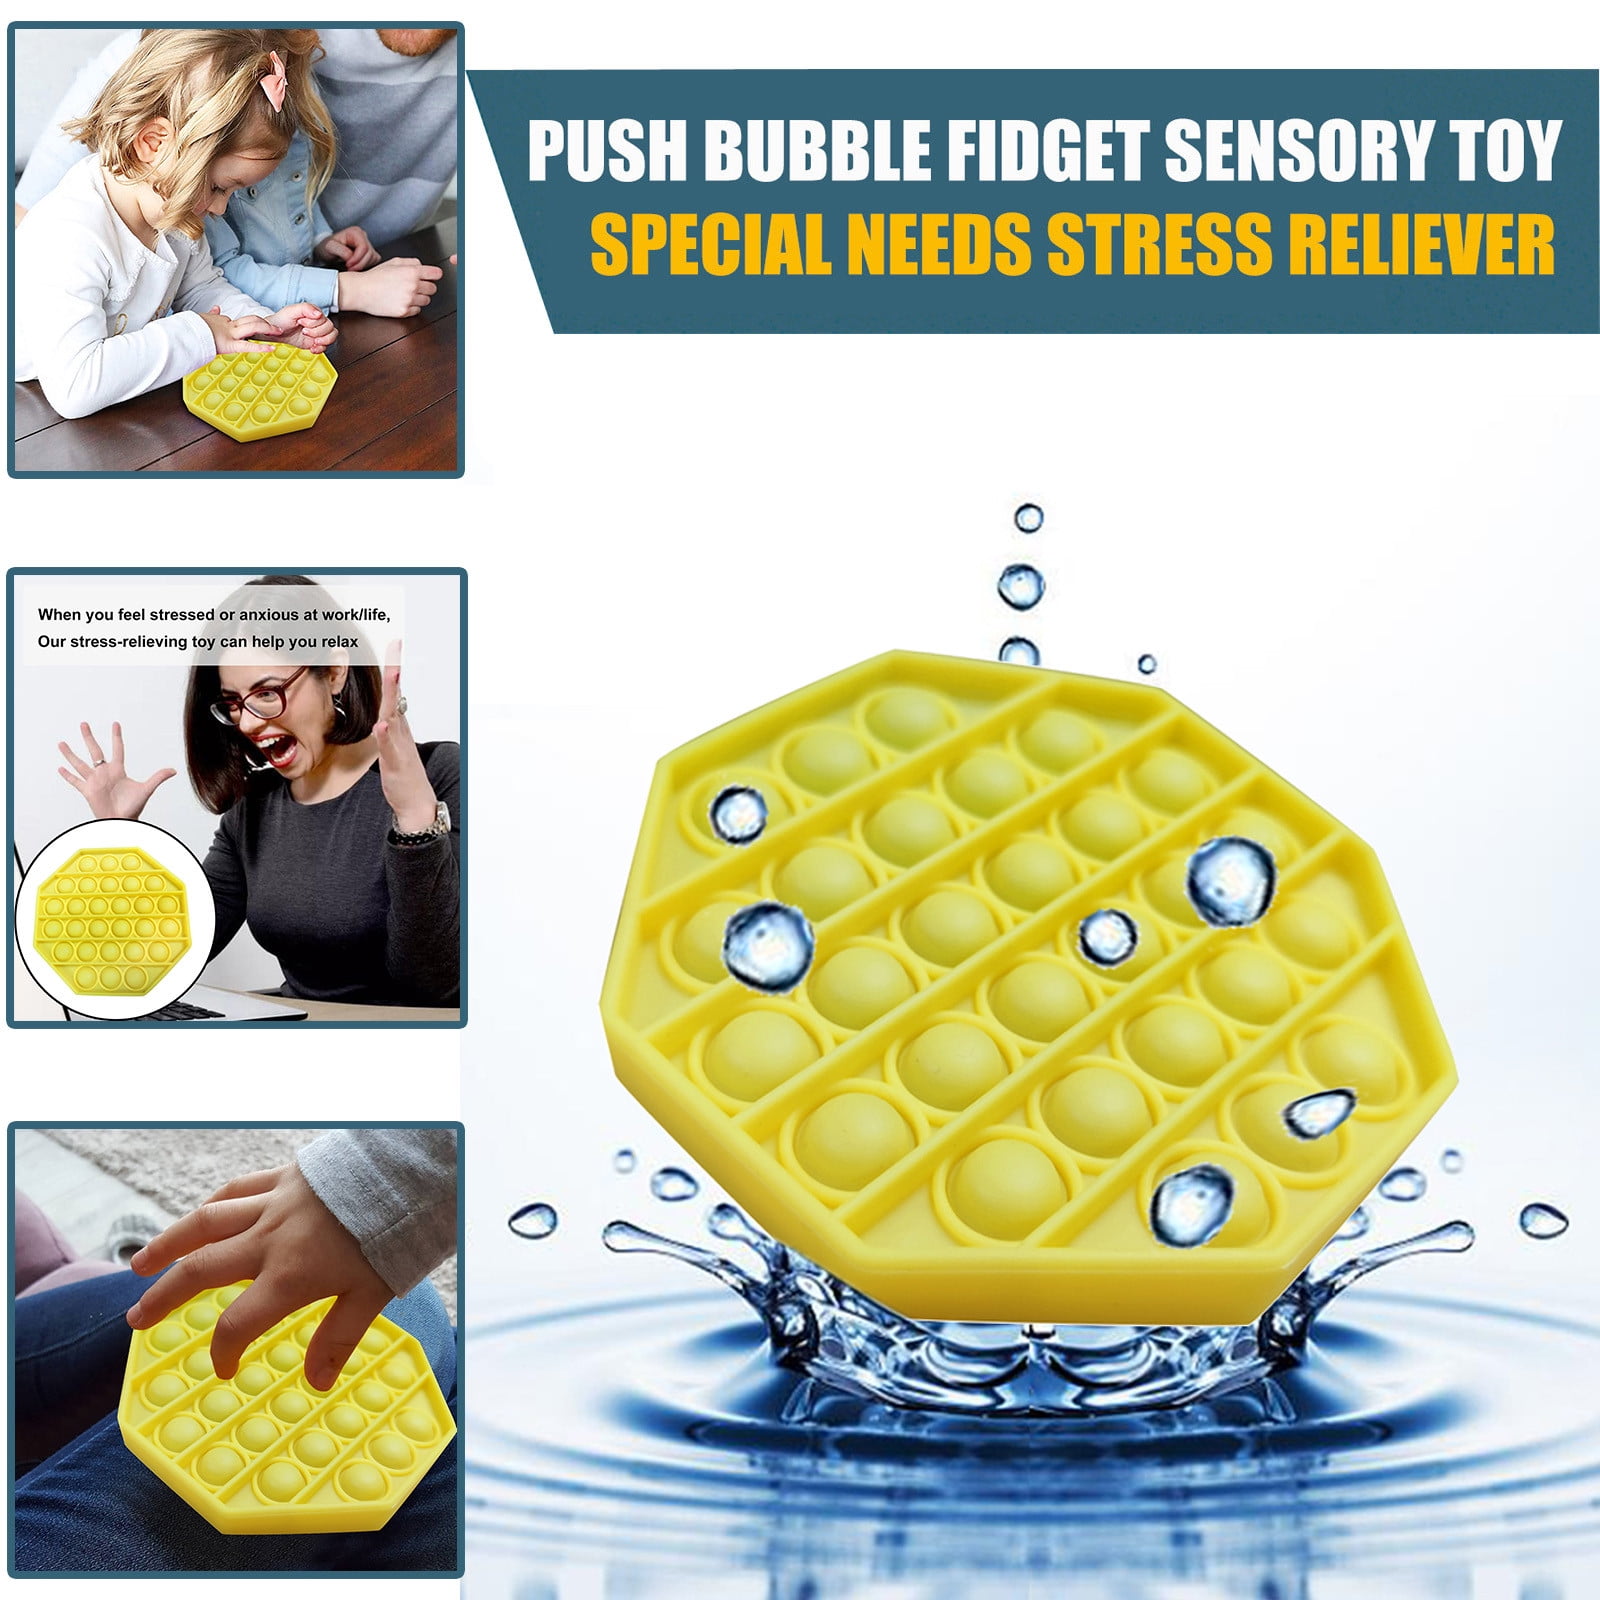 Details about   Extrusion Bubblegum Pop Fidget Sensory Toy Stress Reliever Anxiety Relief Toys show original title 